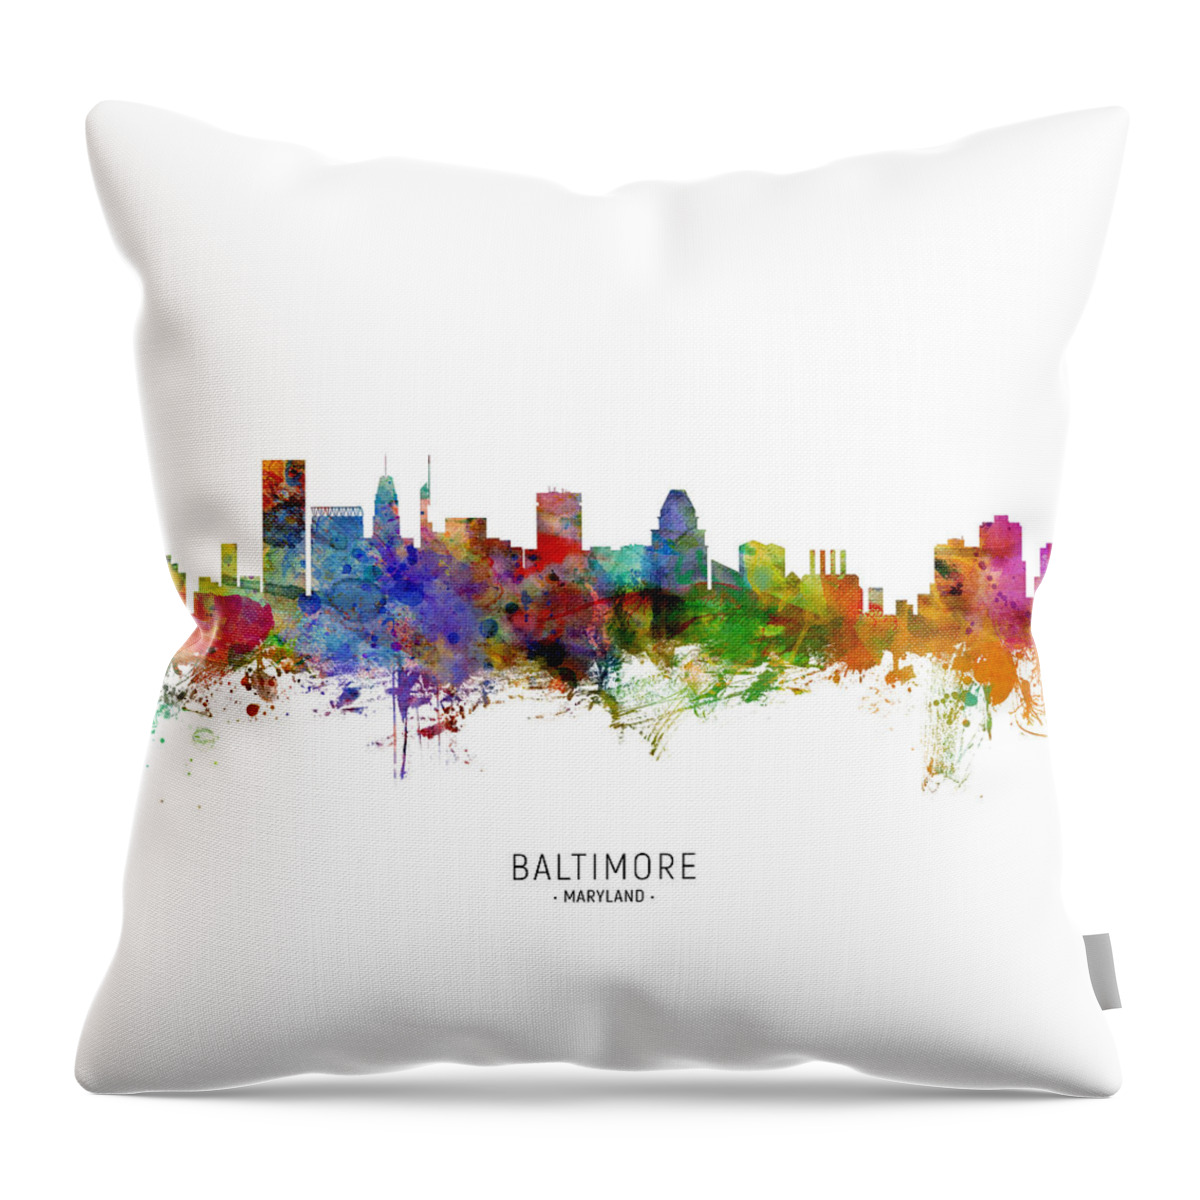 Baltimore Throw Pillow featuring the digital art Baltimore Maryland Skyline by Michael Tompsett